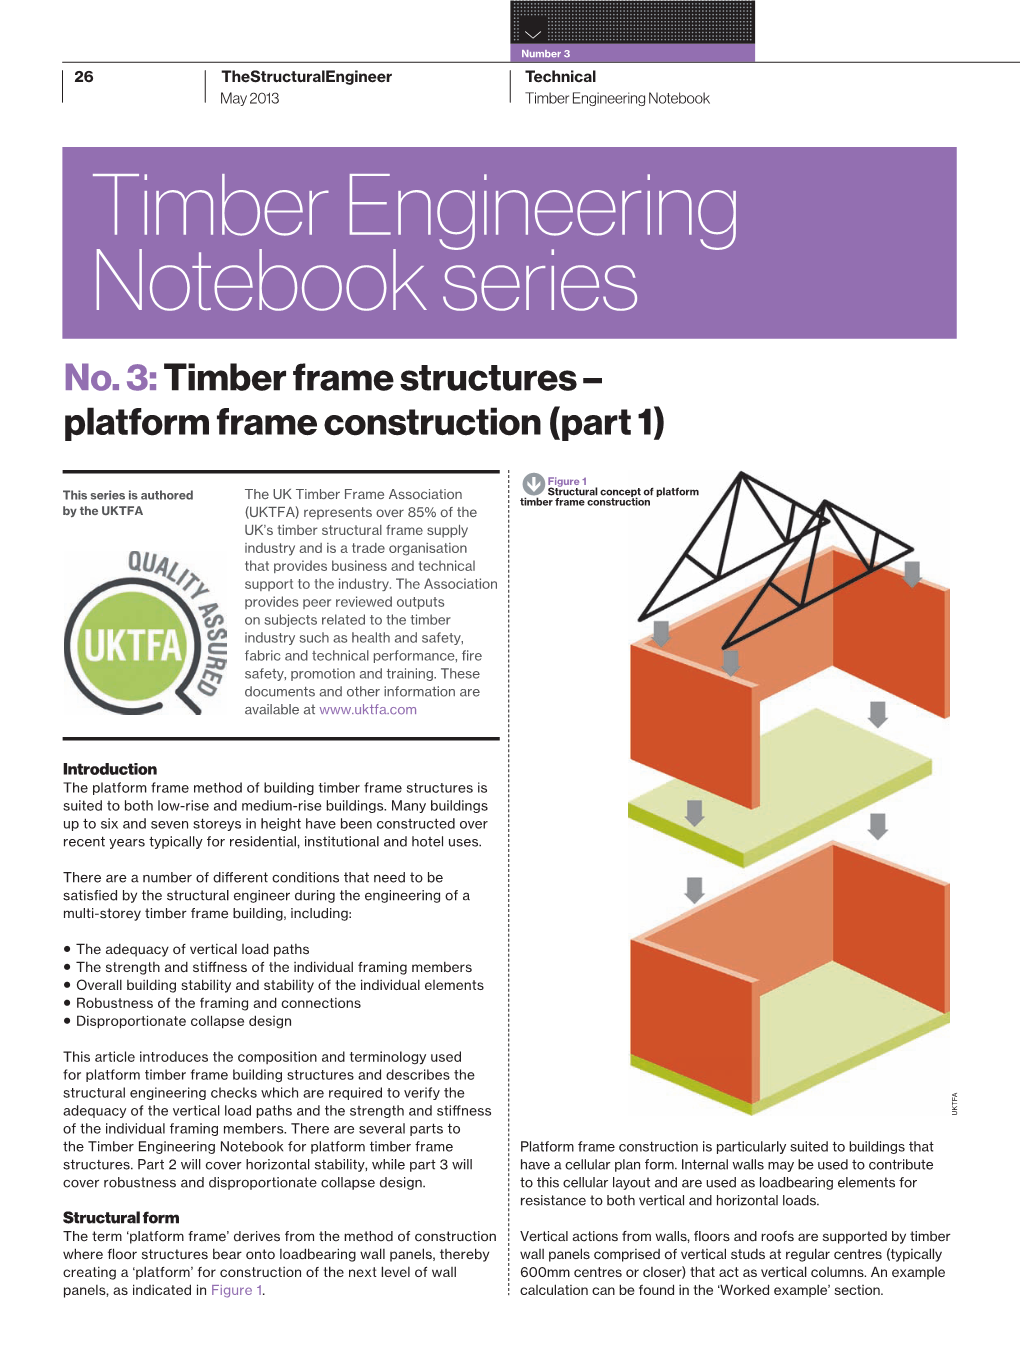 Timber Engineering Notebook Series No